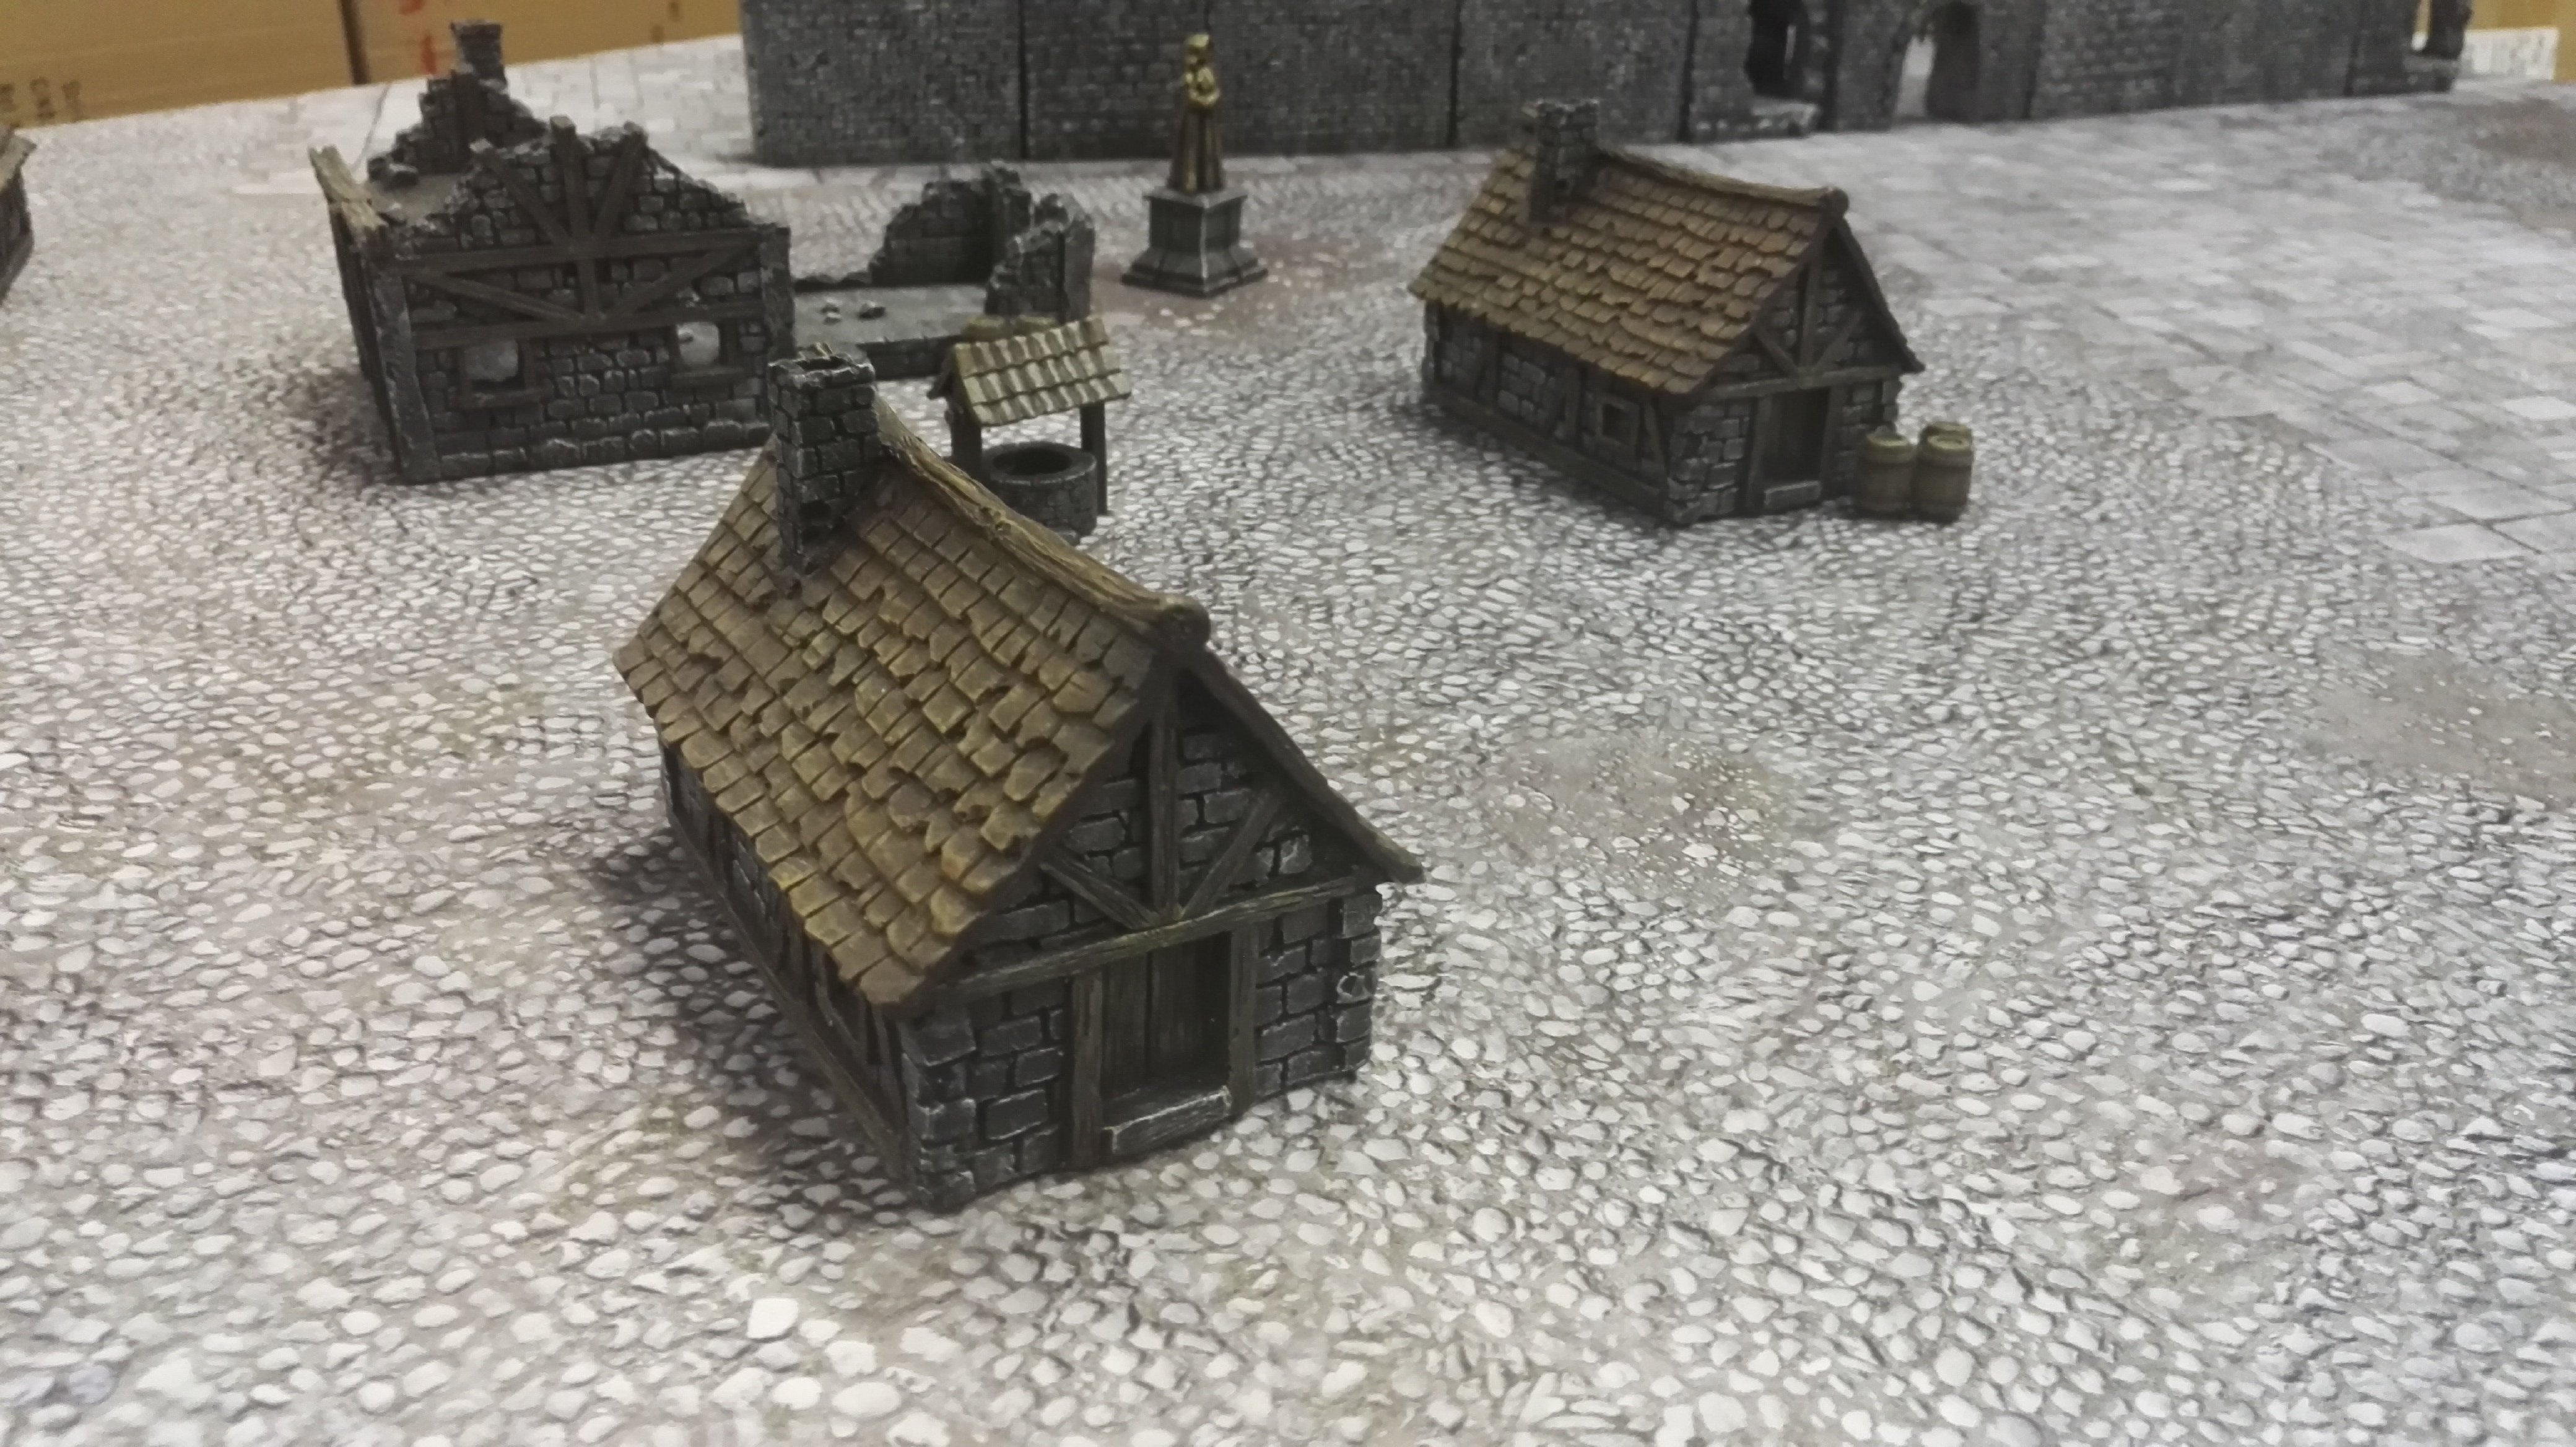 Medieval Town and Castle battle mat & Terrain